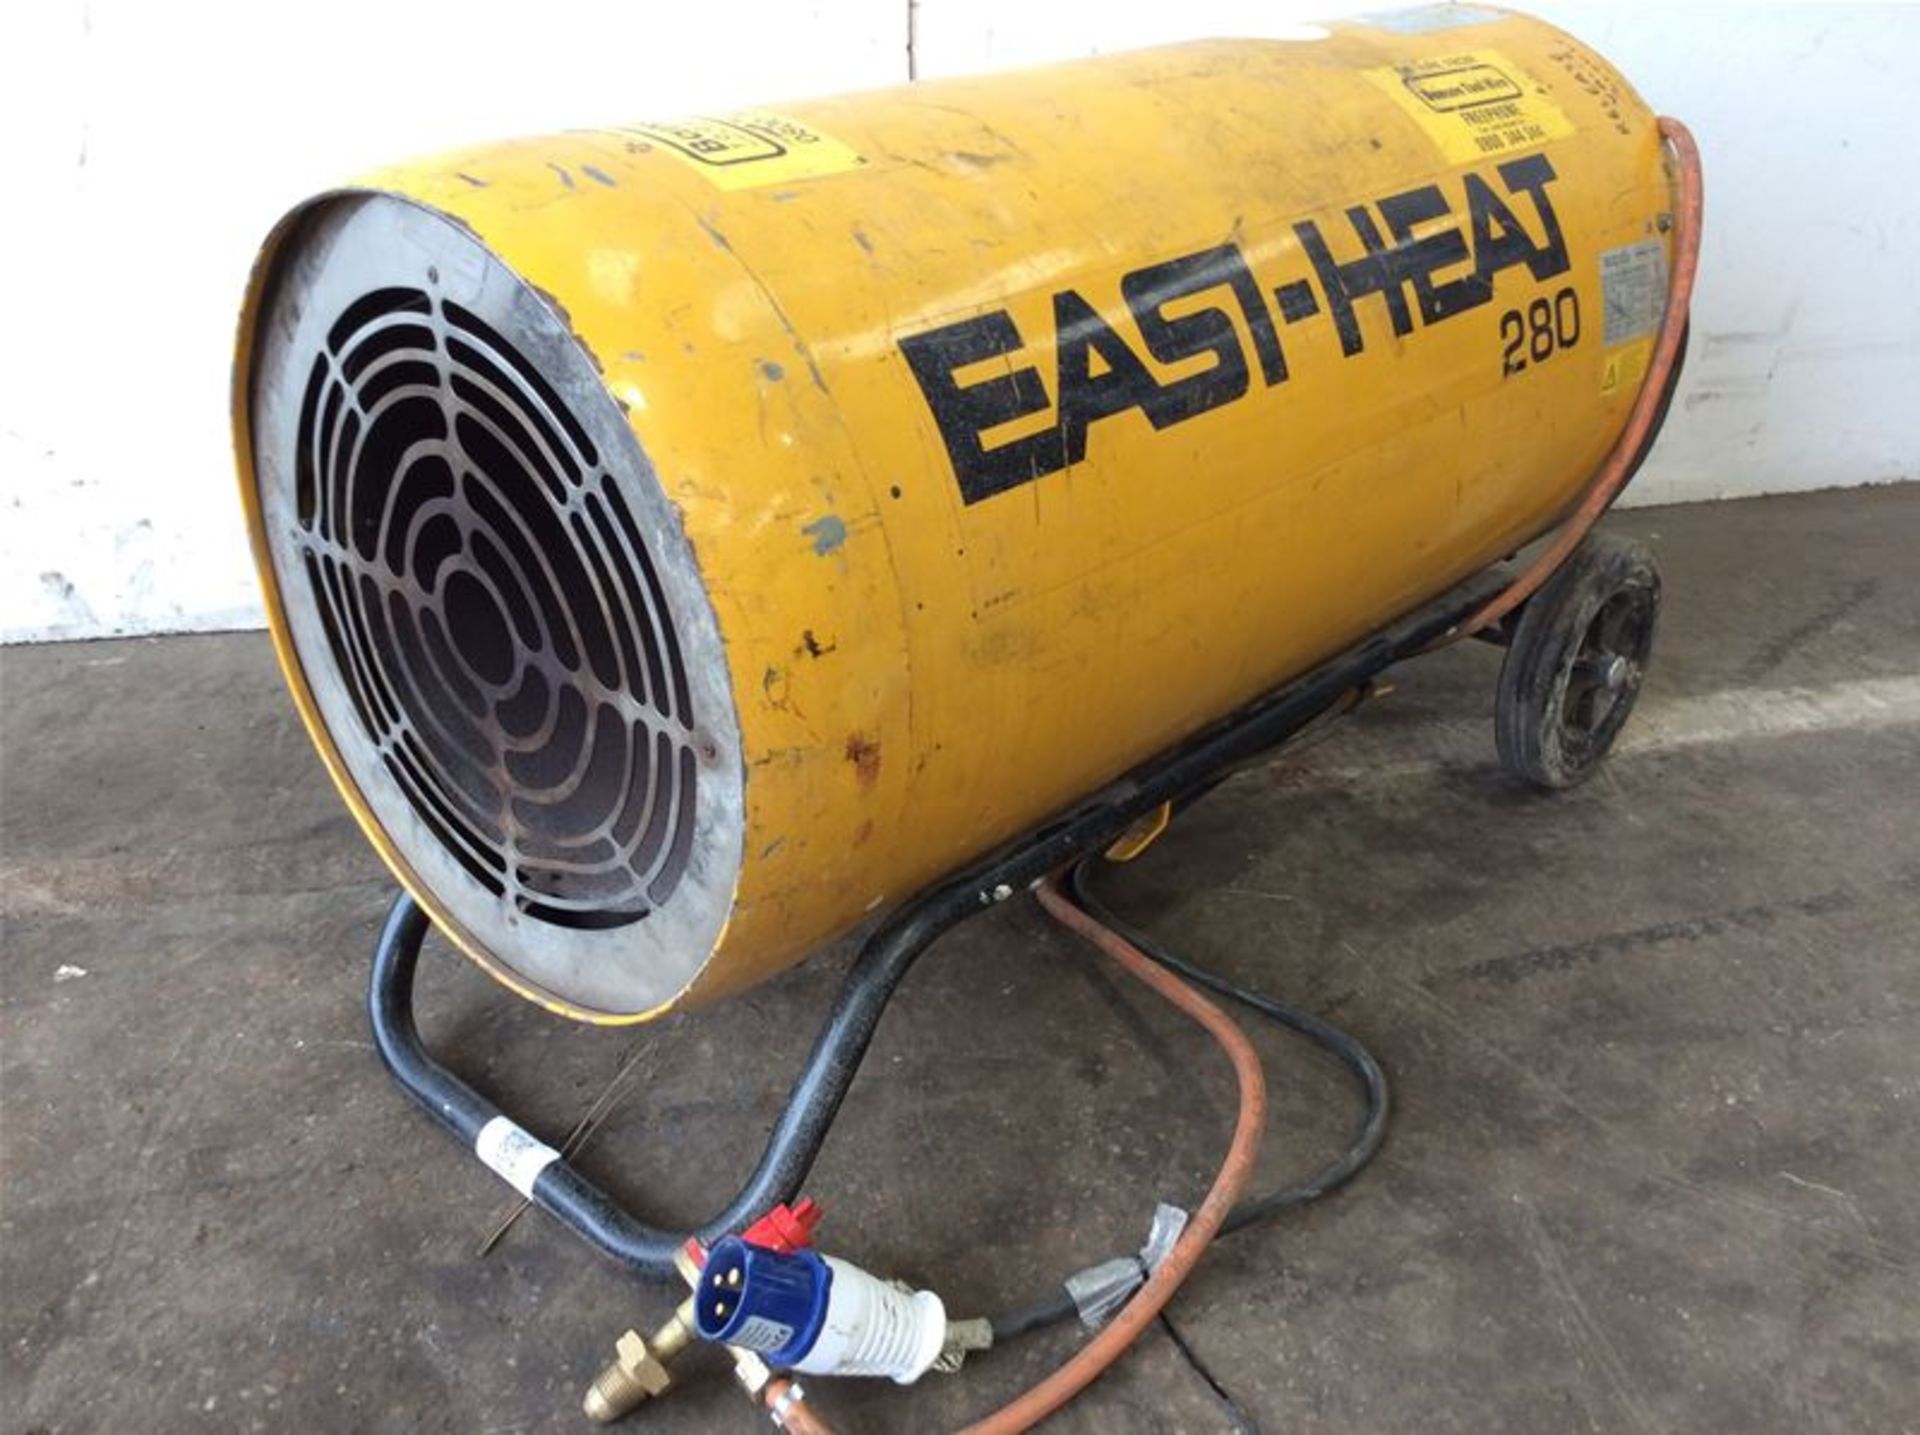 EASI HEAT 280 BLOWER HEATER 260000 BTU - GAS- 240V